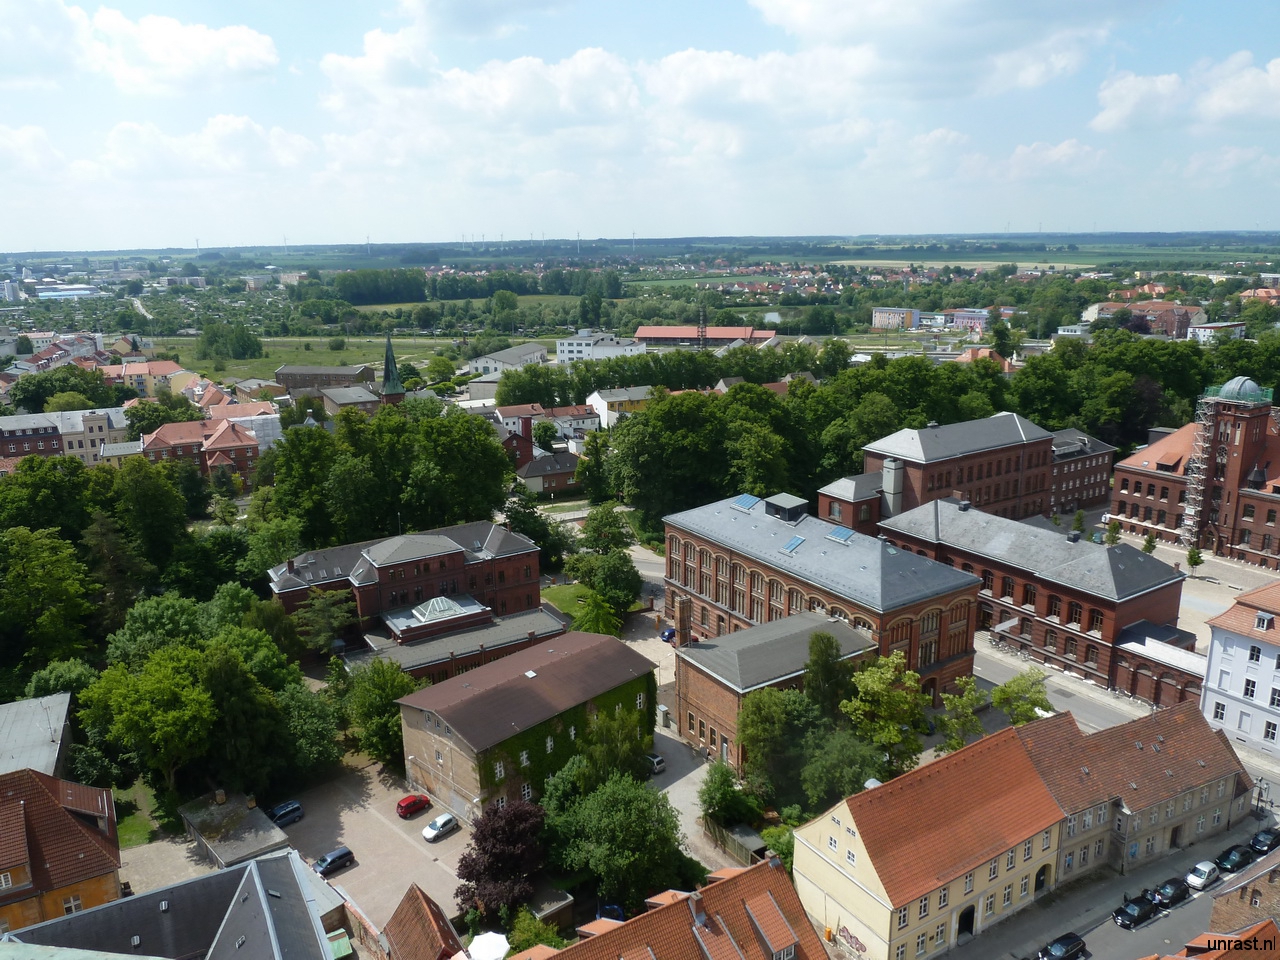 Greifswald 2013